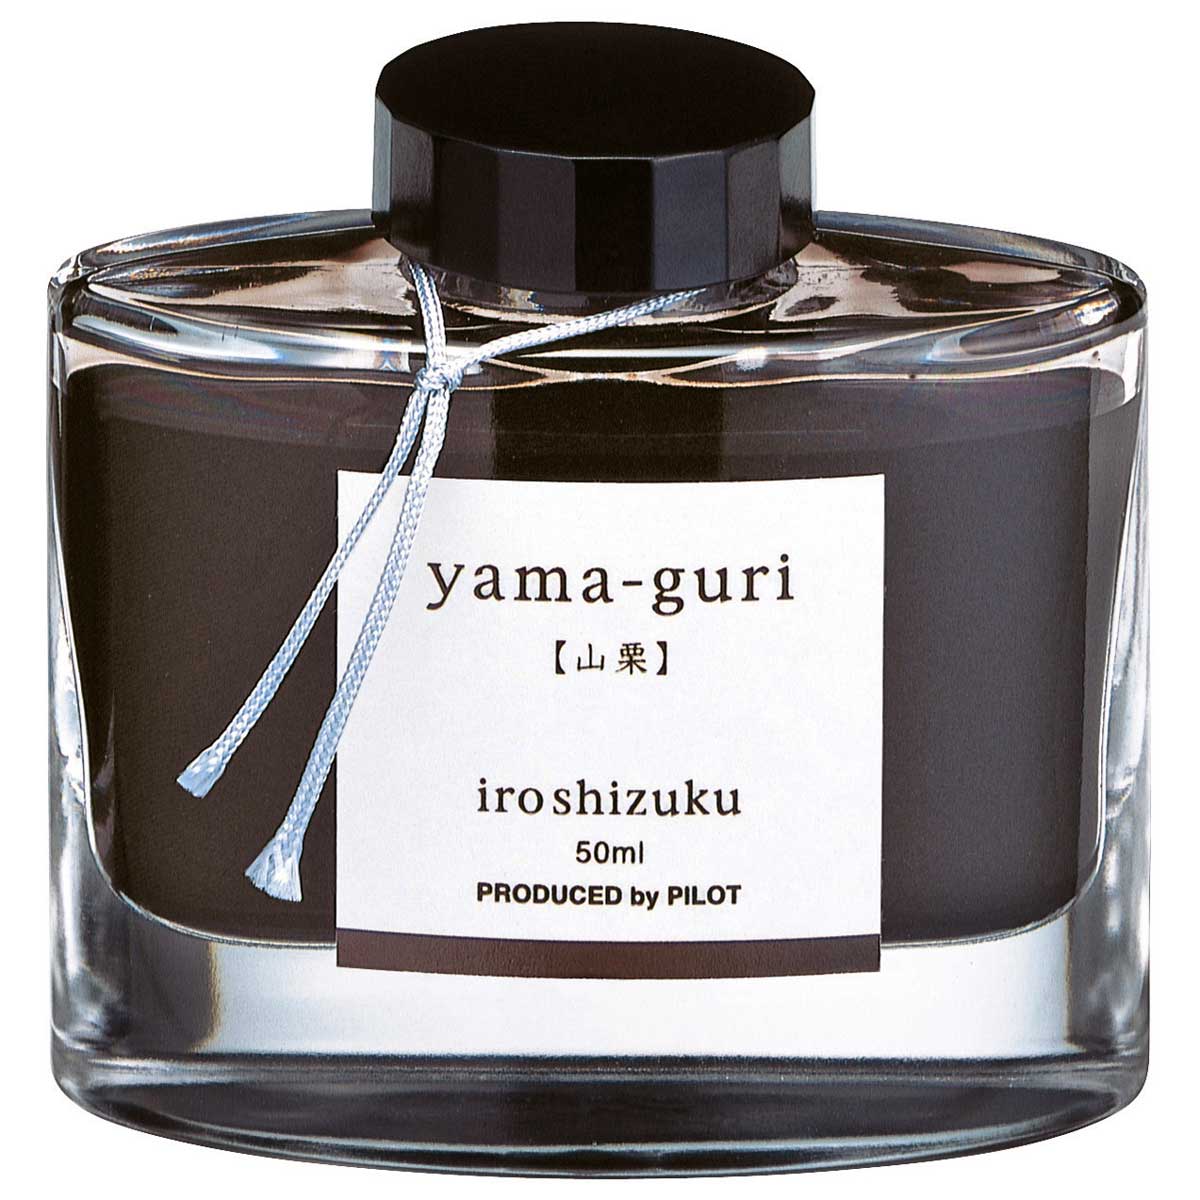 Iroshizuku ink, yama-guri, dark brown